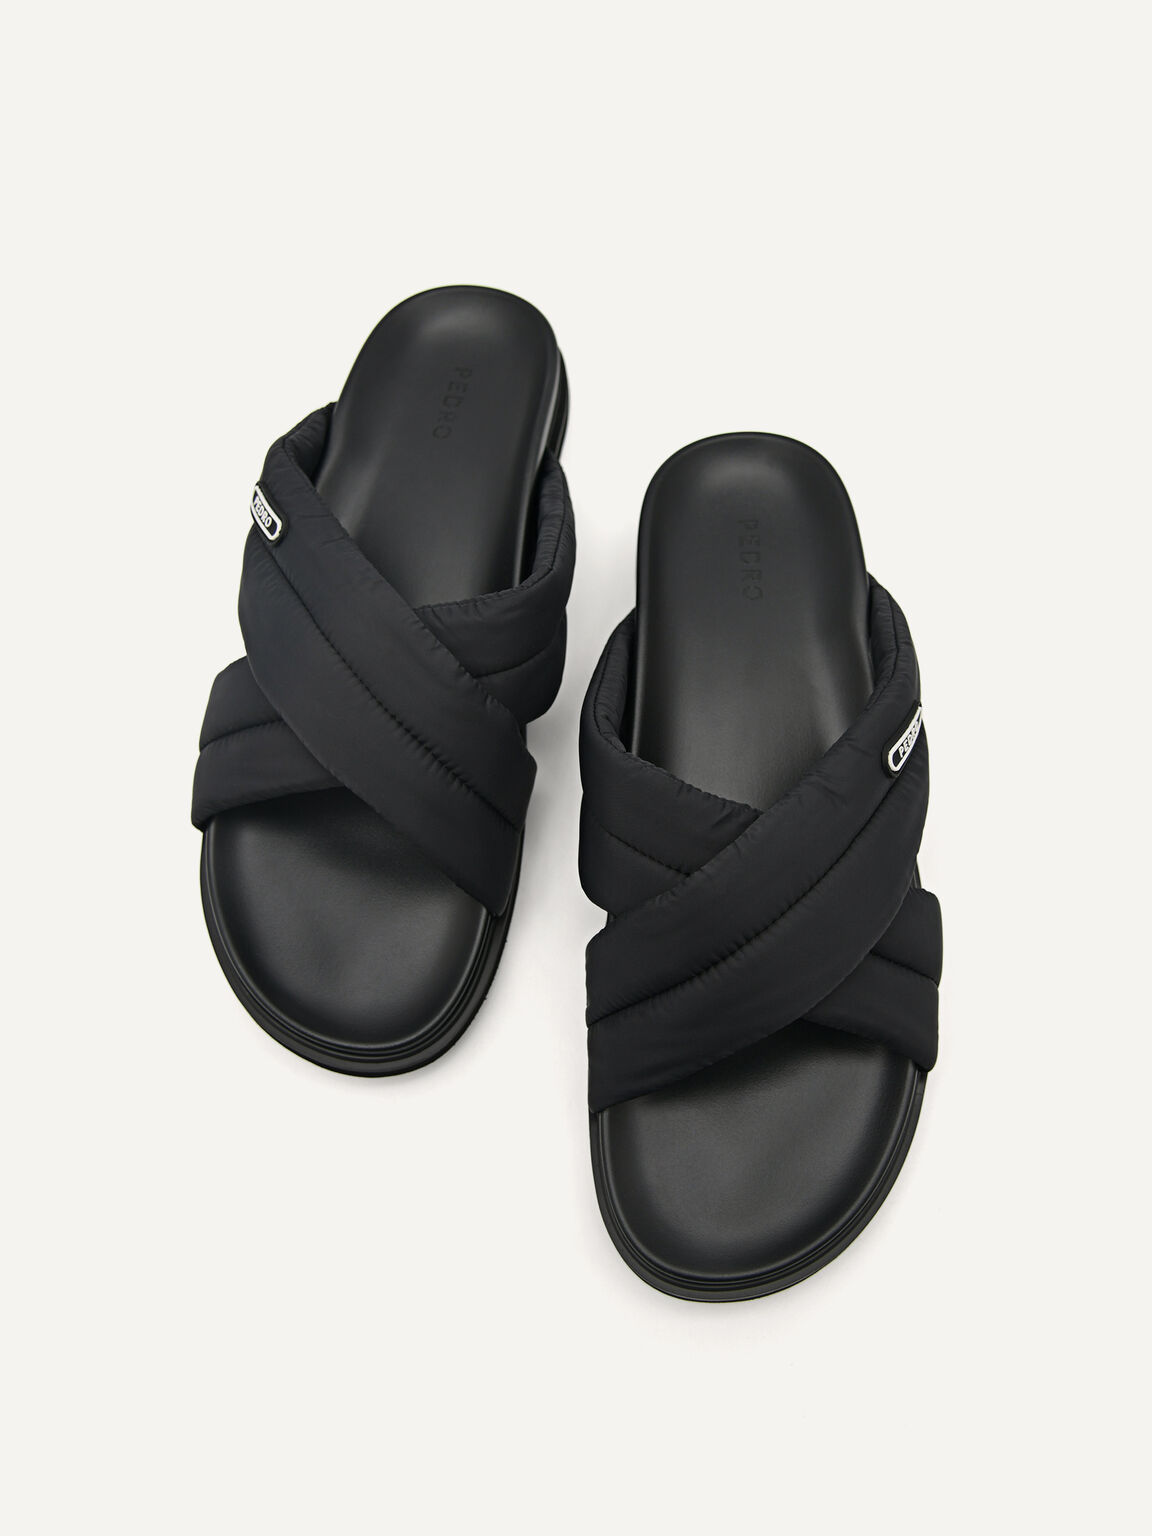 Nylon Puffy Cross-strap Sandals, Black